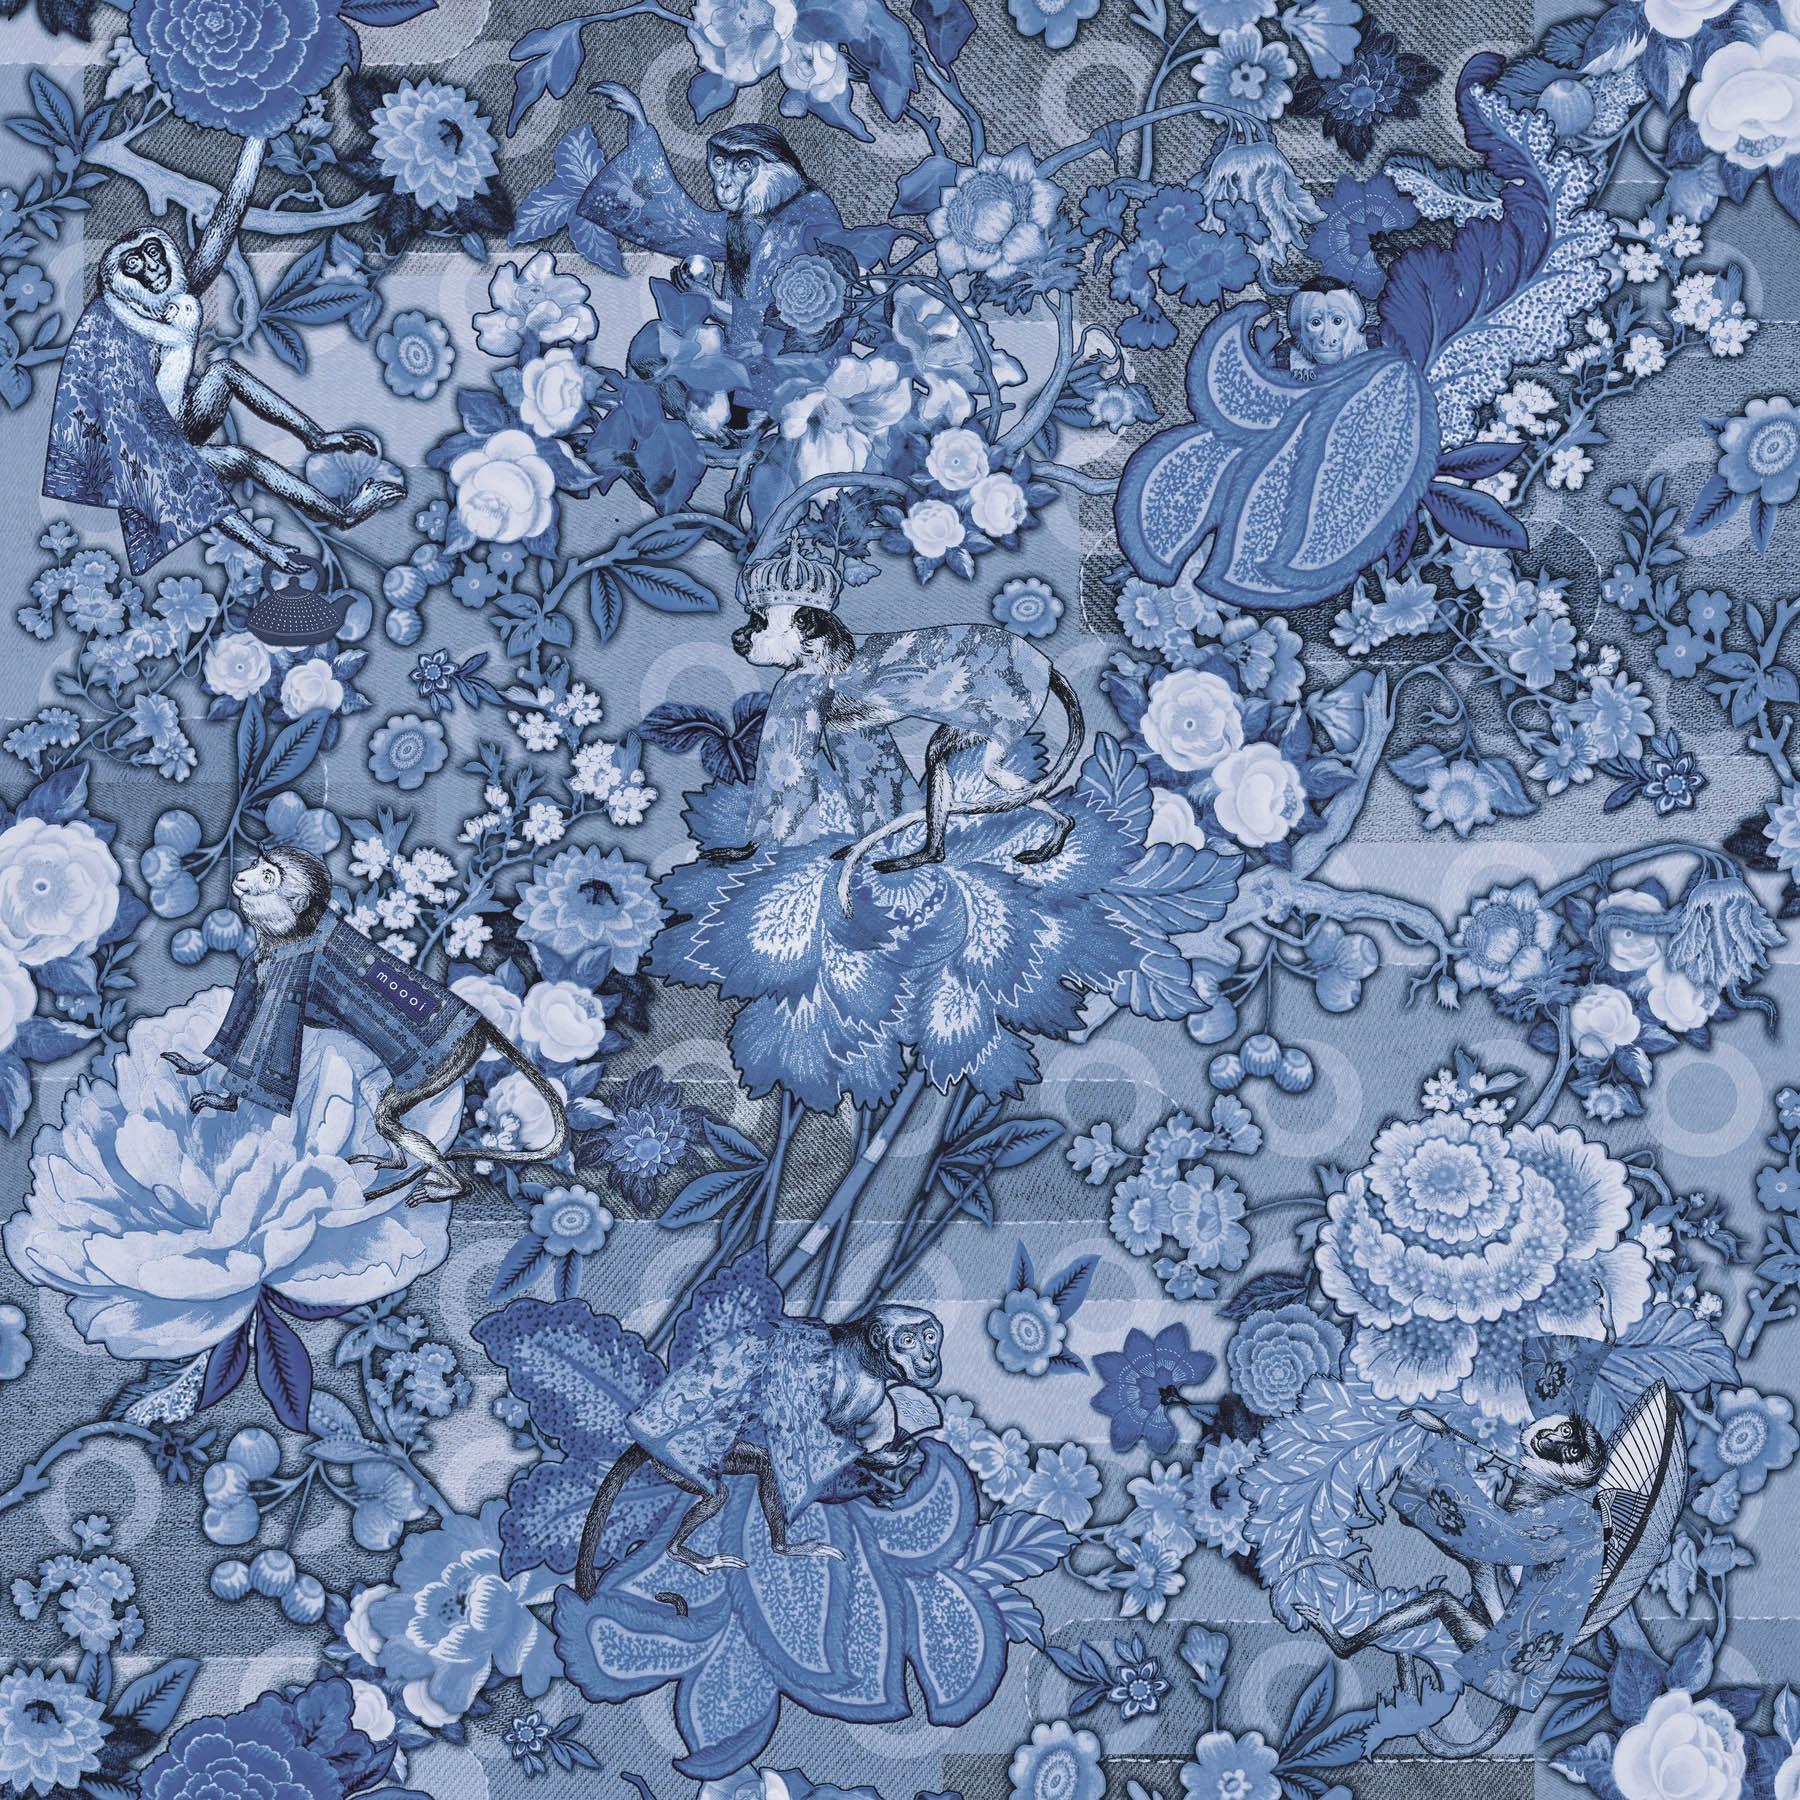 Moooi Small Rendezvous Tokyo Blue Ming Blue Rechteckiger Teppich aus Wolle mit Blindsaum

